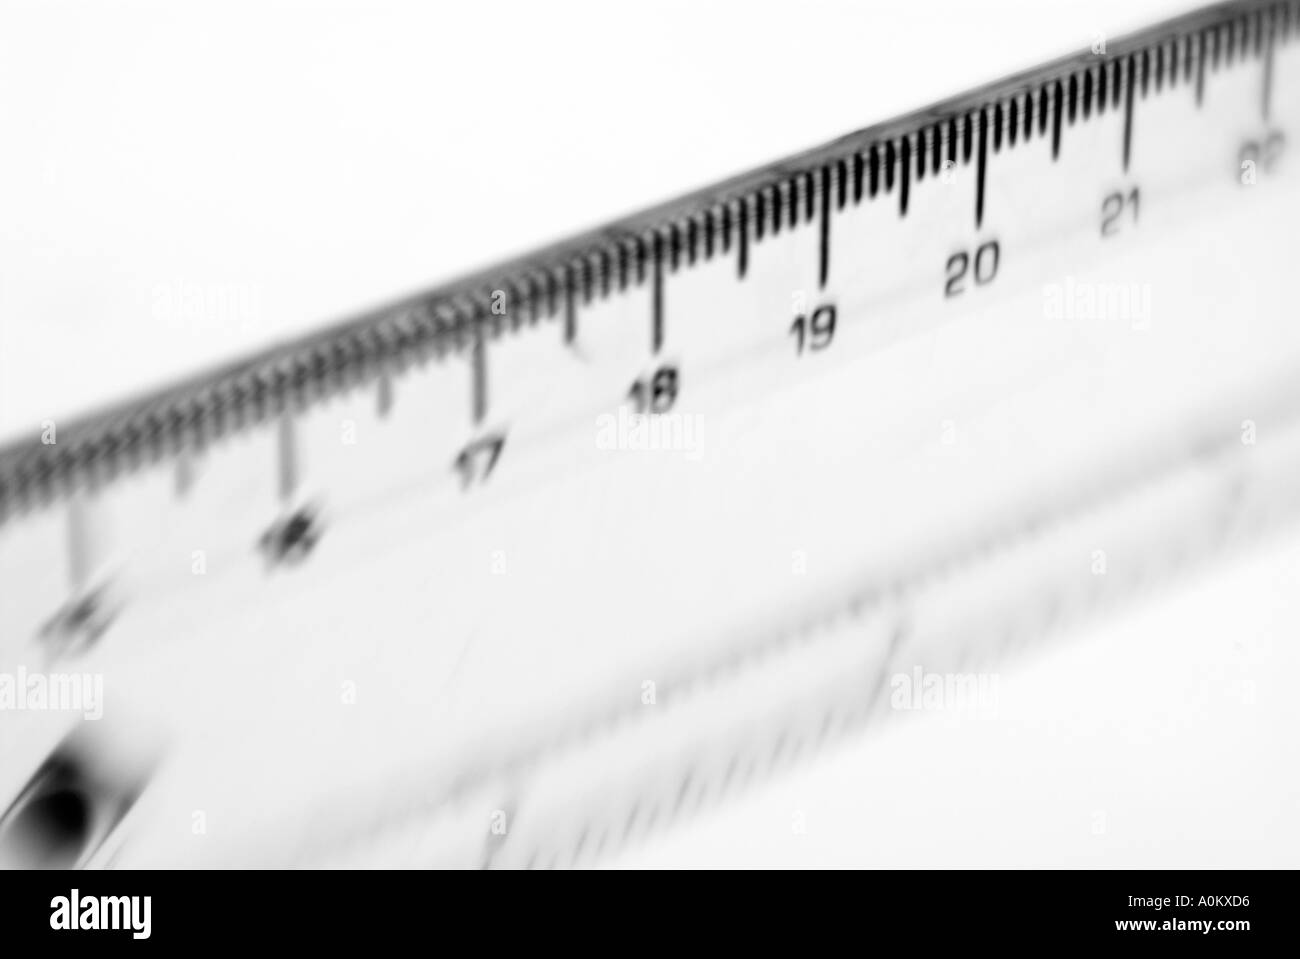 ruler measure measurement stick measuring units distance mm inch inches millimetres precision plastic clear Stock Photo